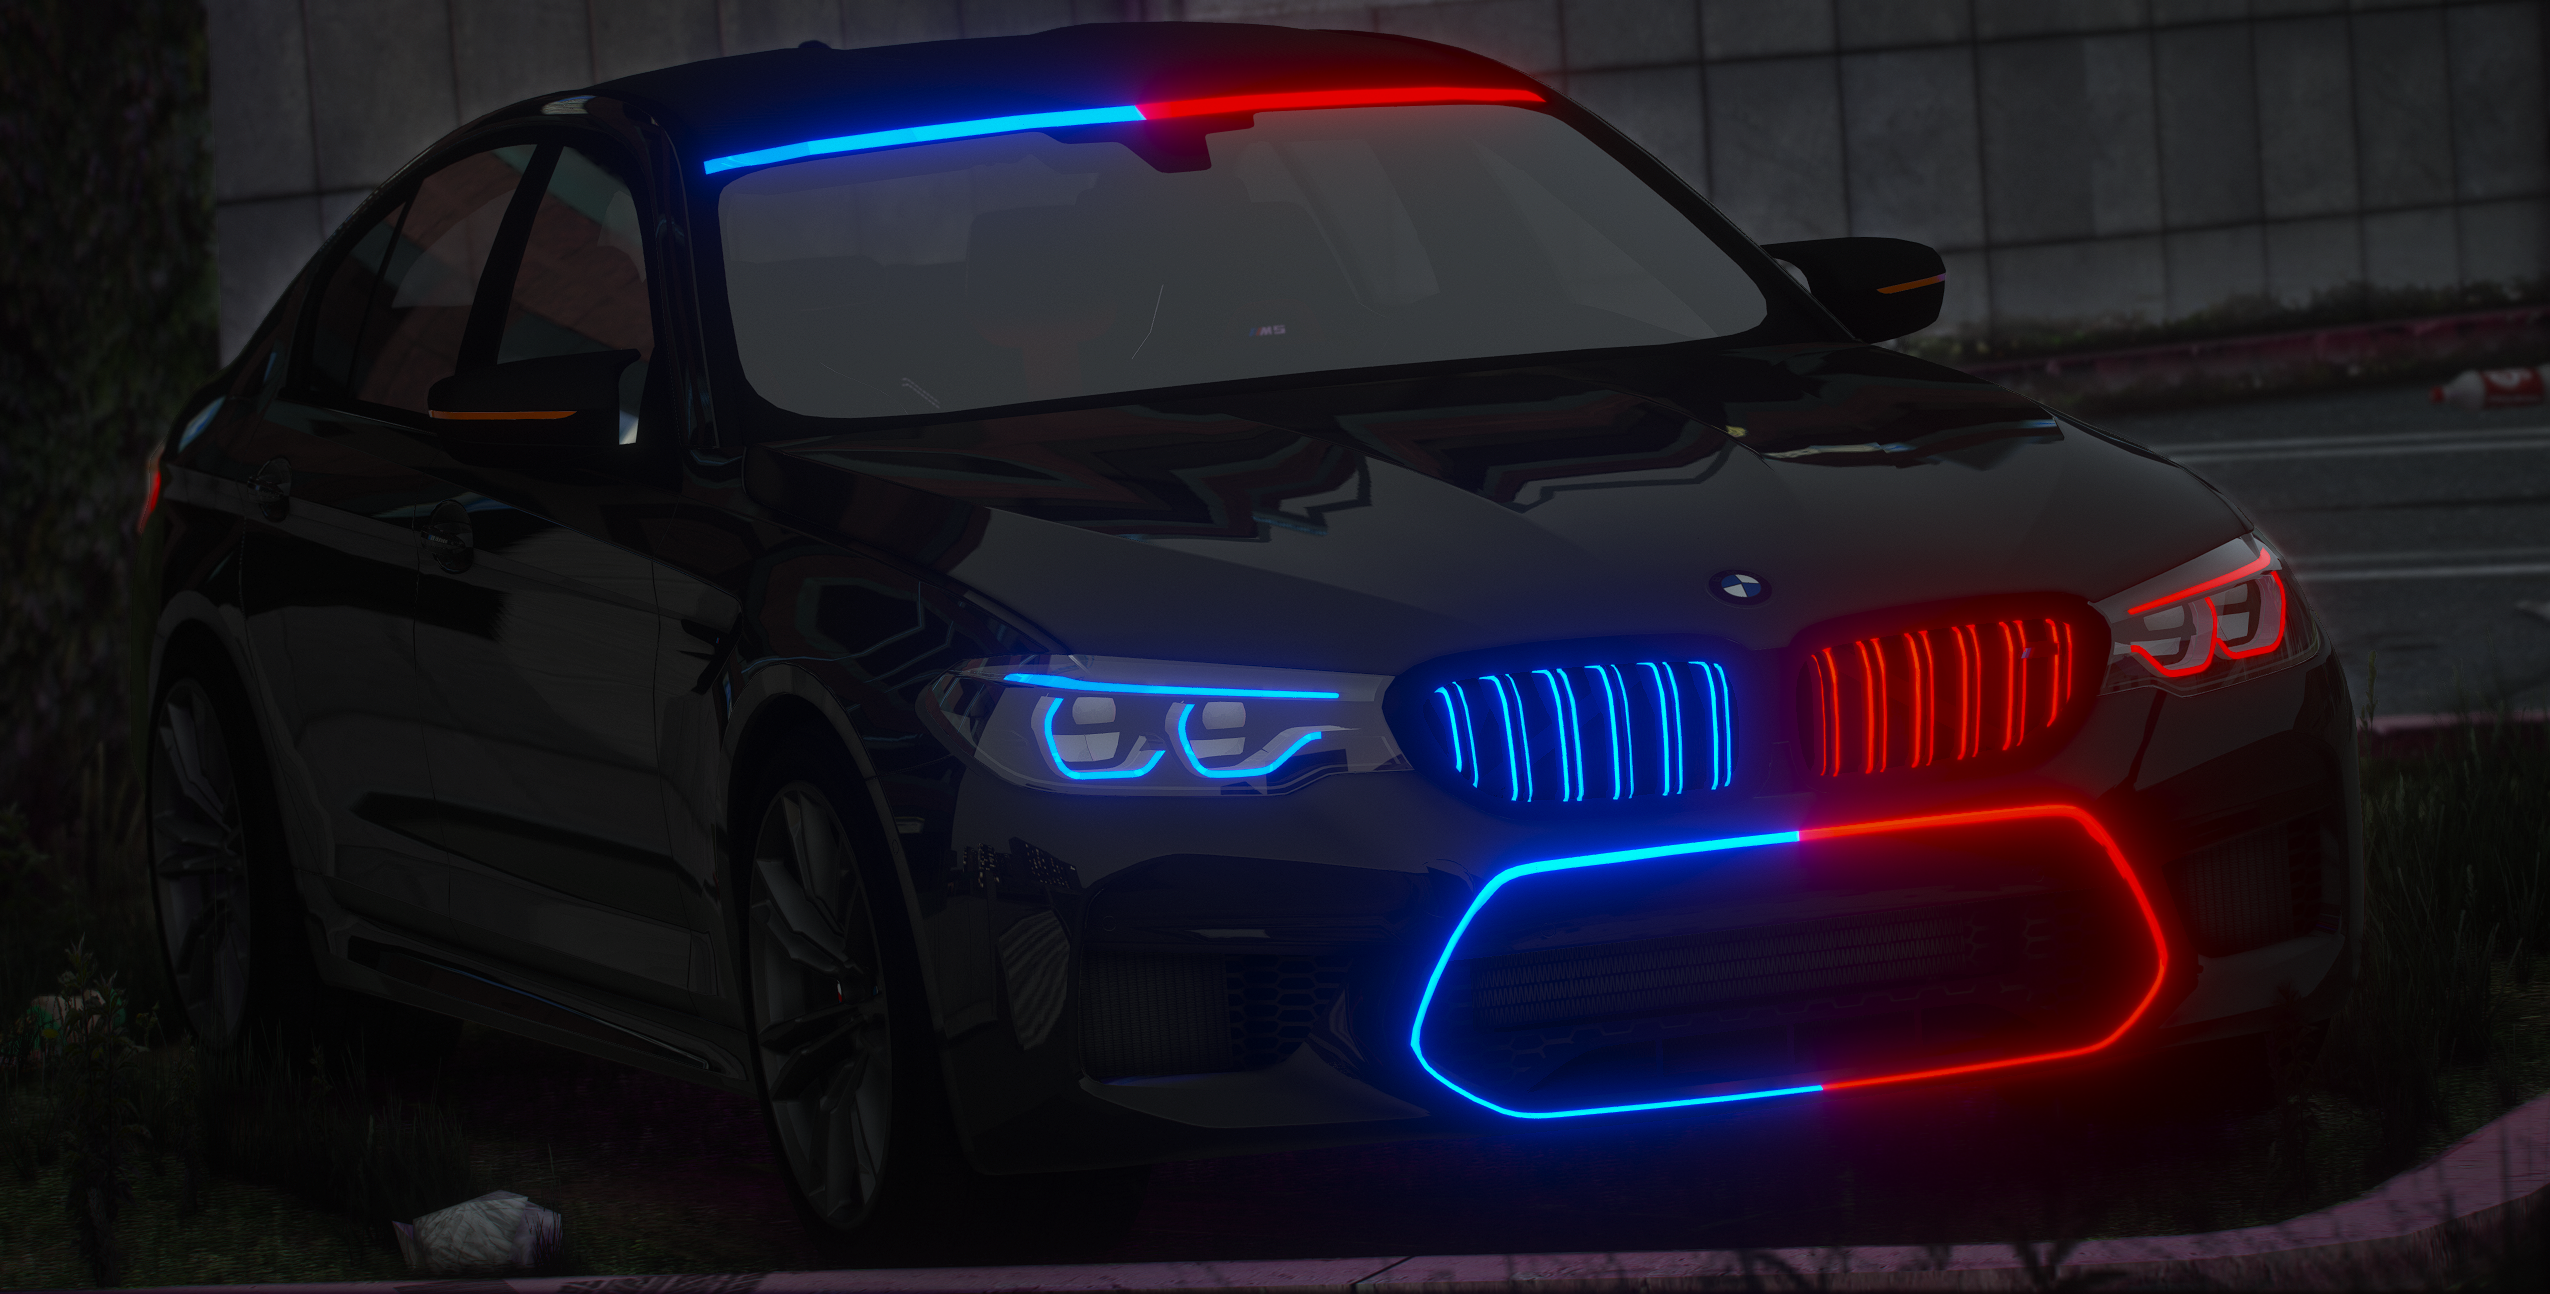 BMW M5 2019 FiveM Police Vehicle